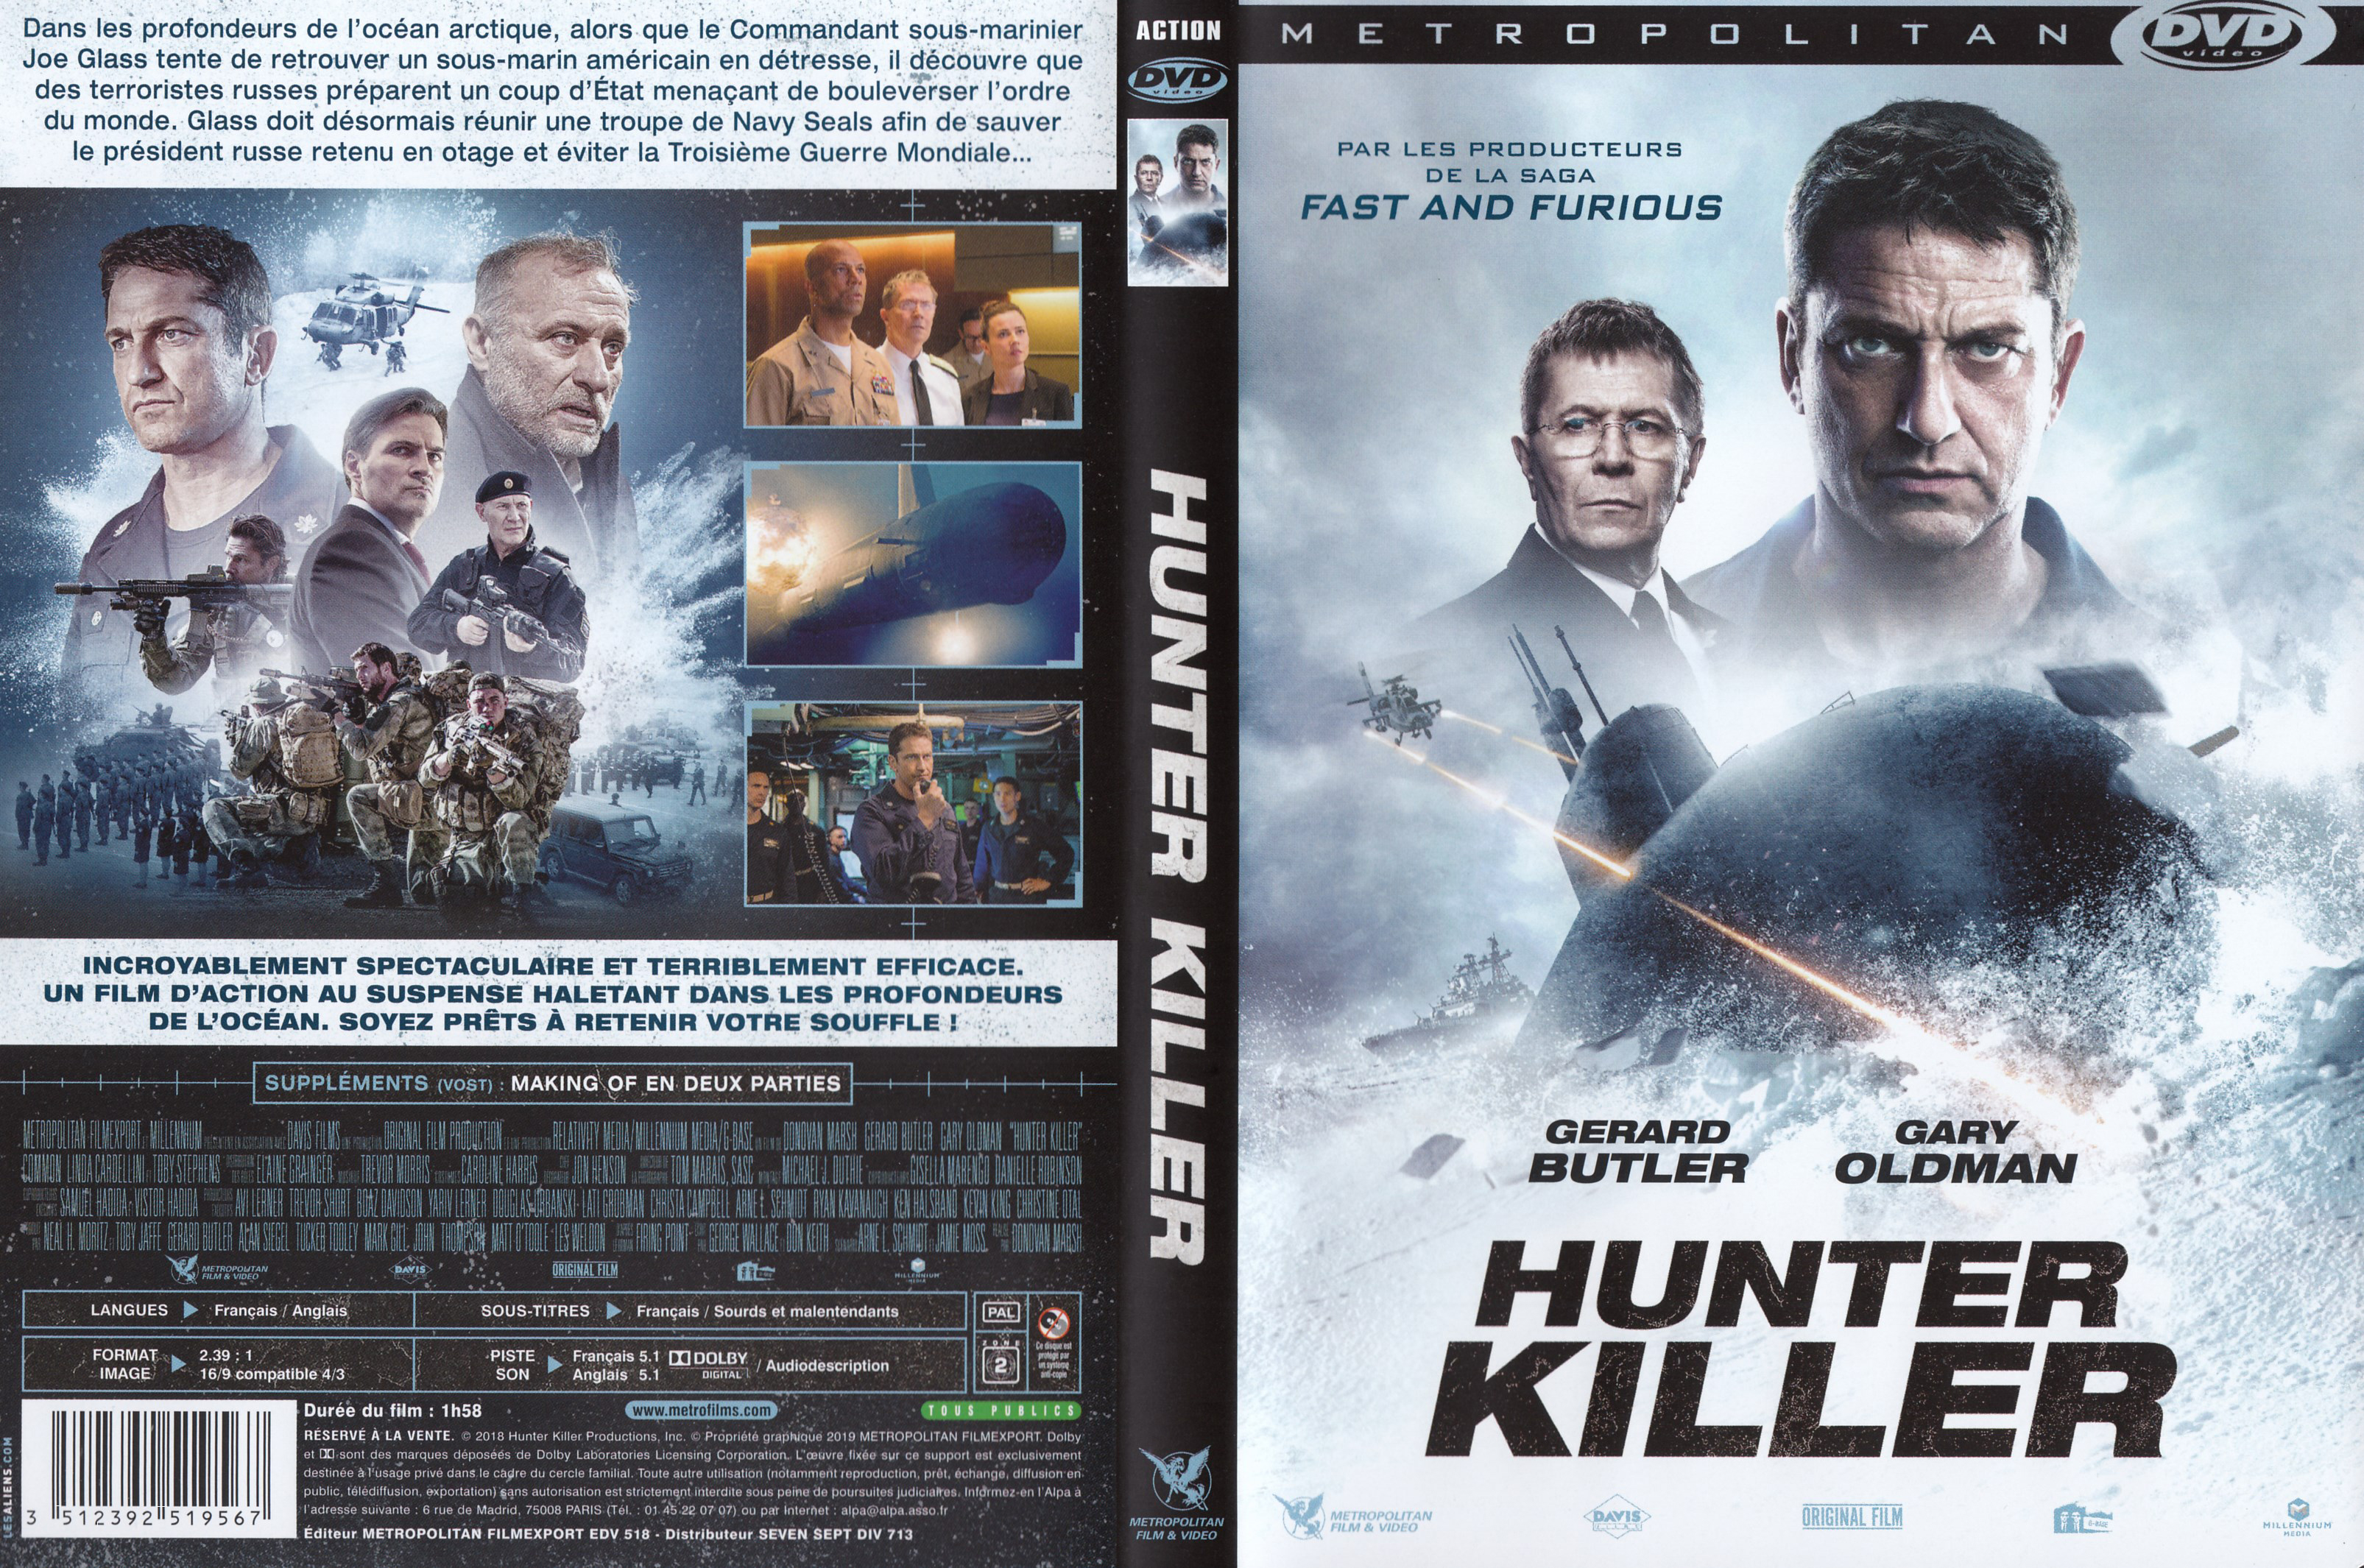 Jaquette DVD Hunter killer